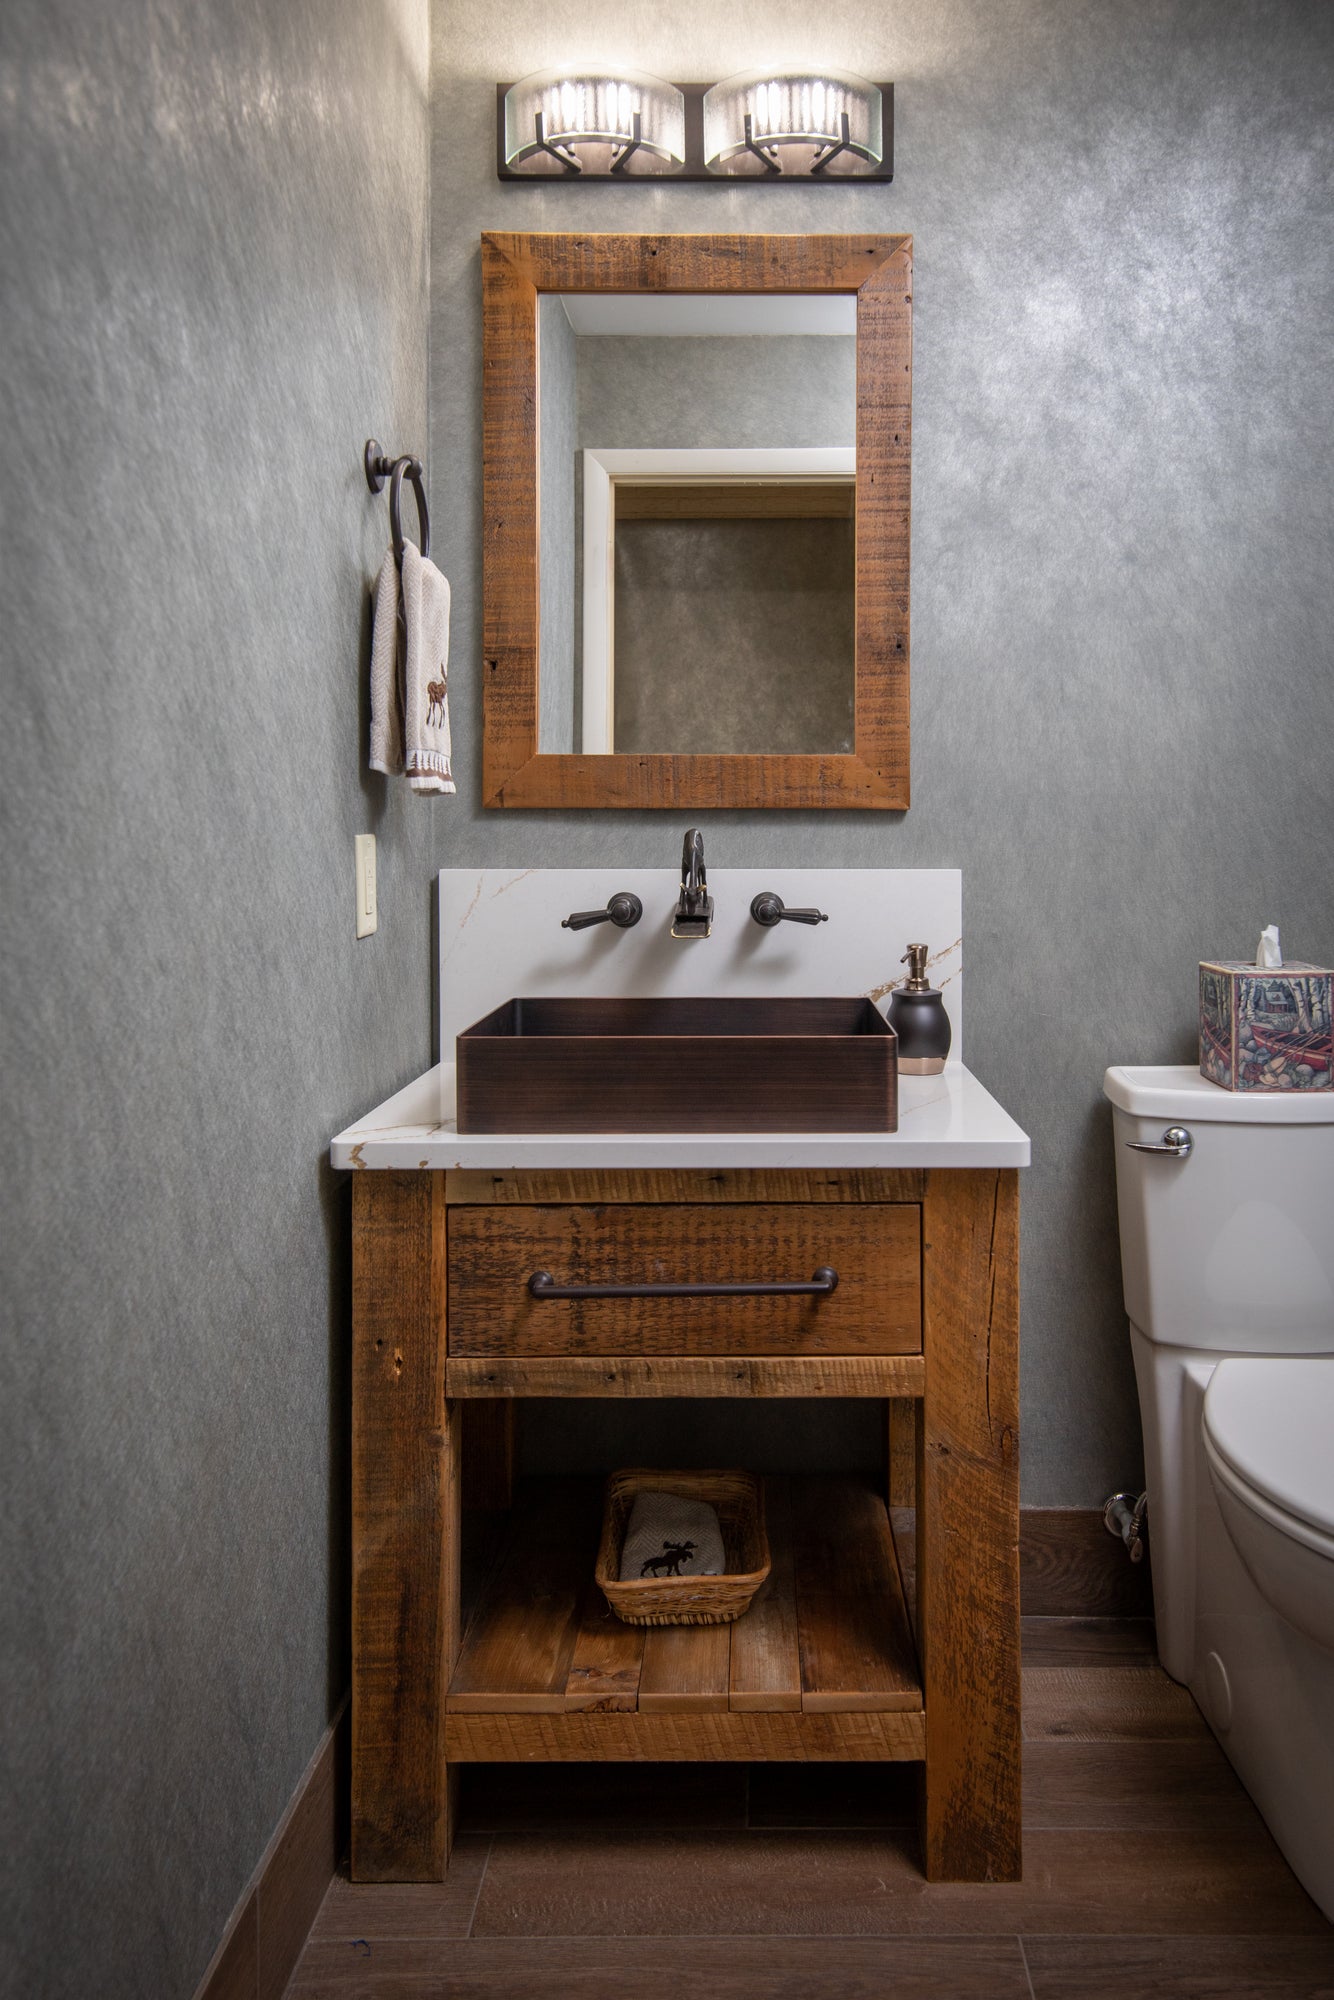 Rectangular 19 x 14 1/2" Stainless Steel Bathroom Vessel Sink with Drain in Bronze